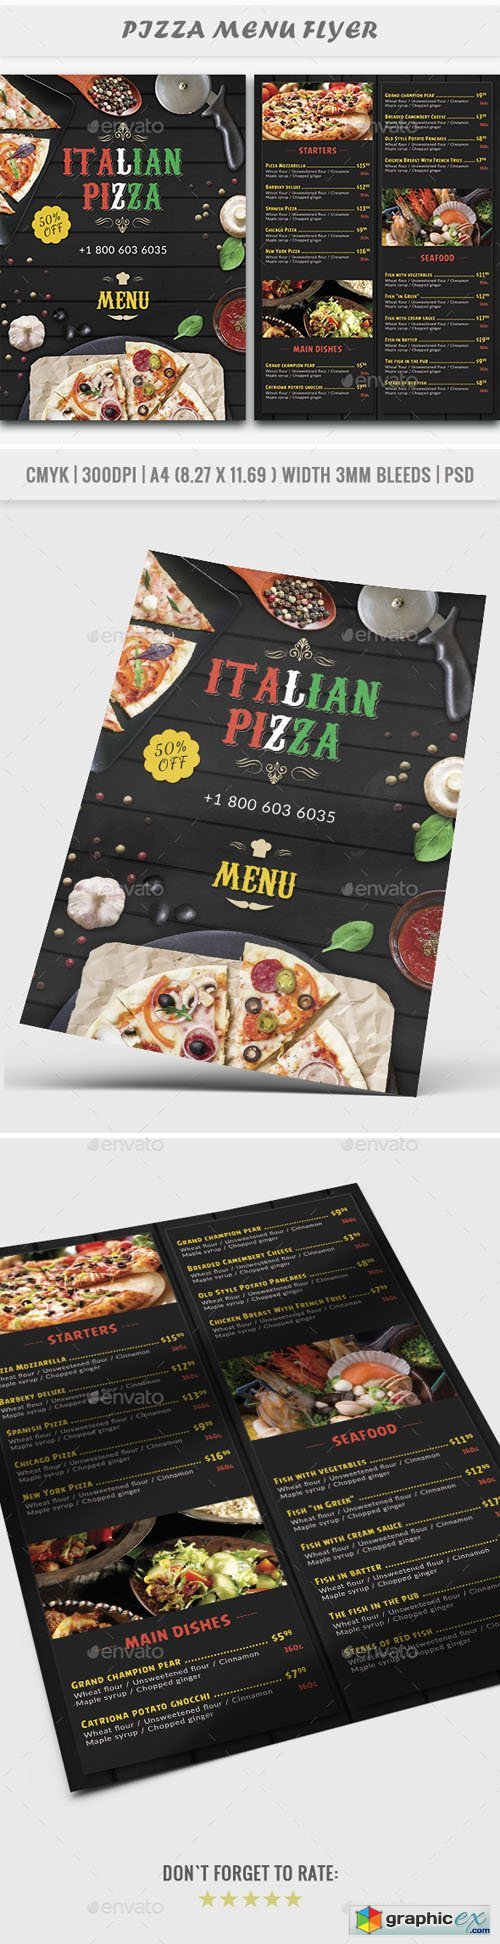 Pizza Menu Flyer | Restaurant